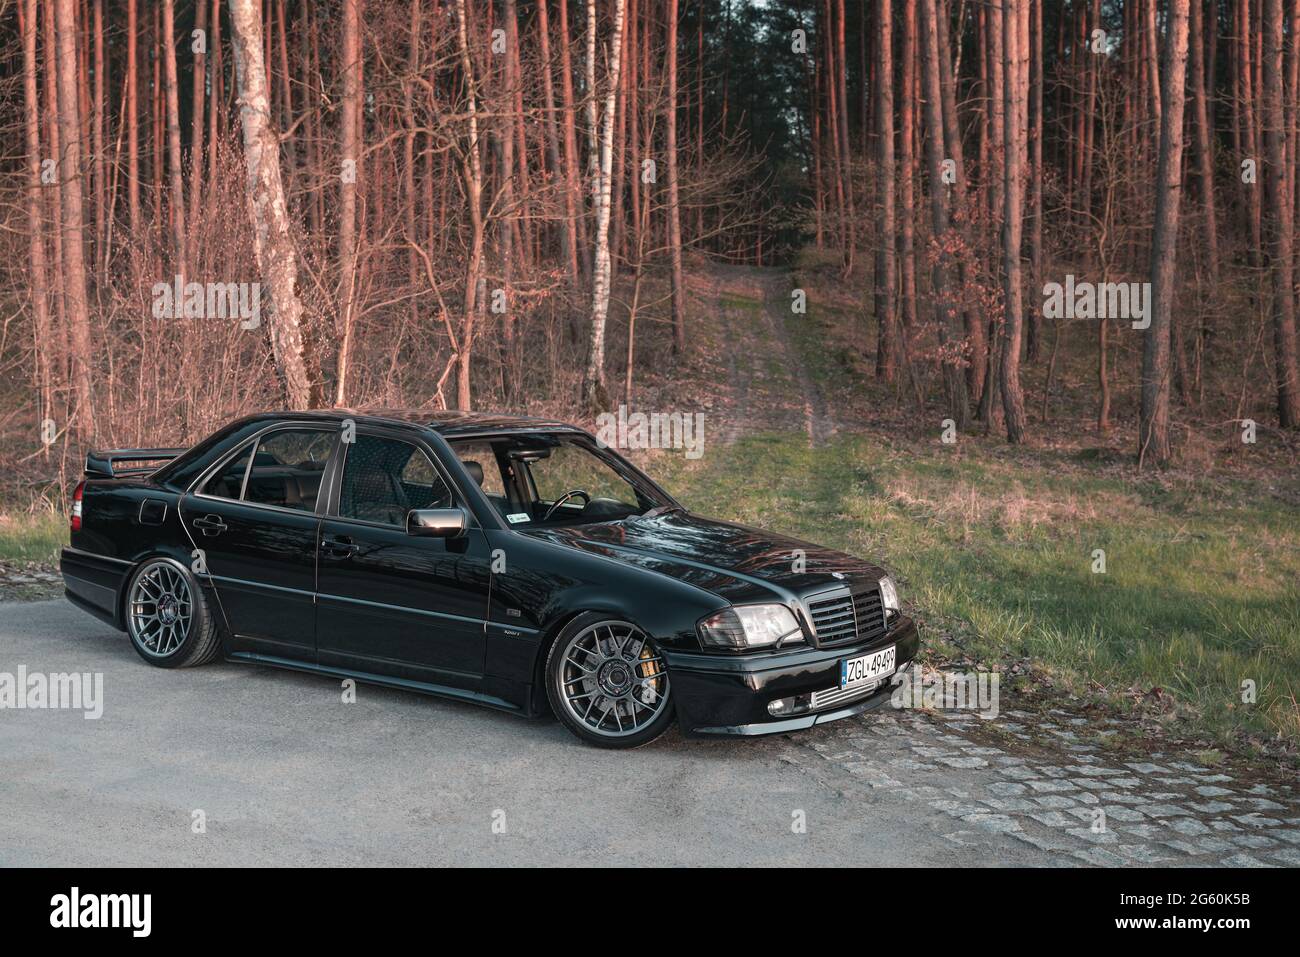 Goleniow, Poland - April 20th, 2021: Old black tuned Mercedes Benz